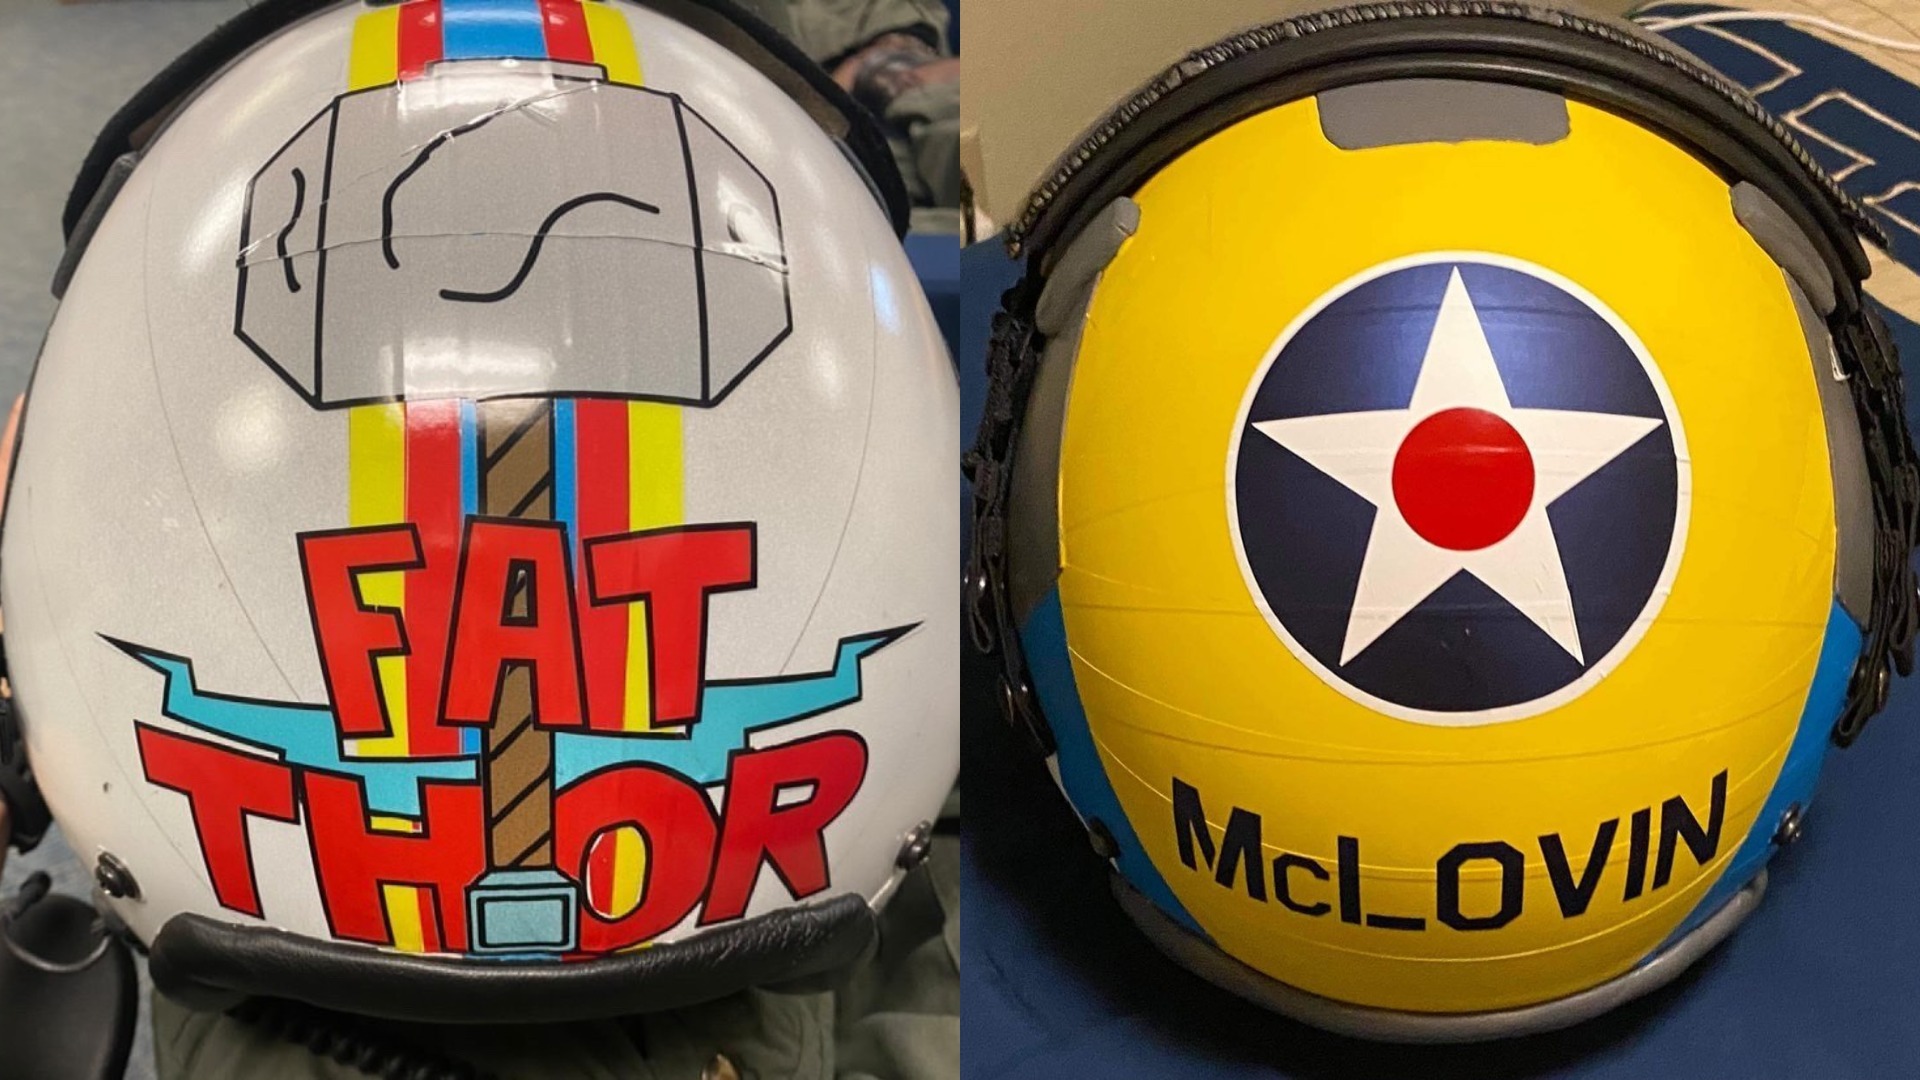 fighter pilot helmet art